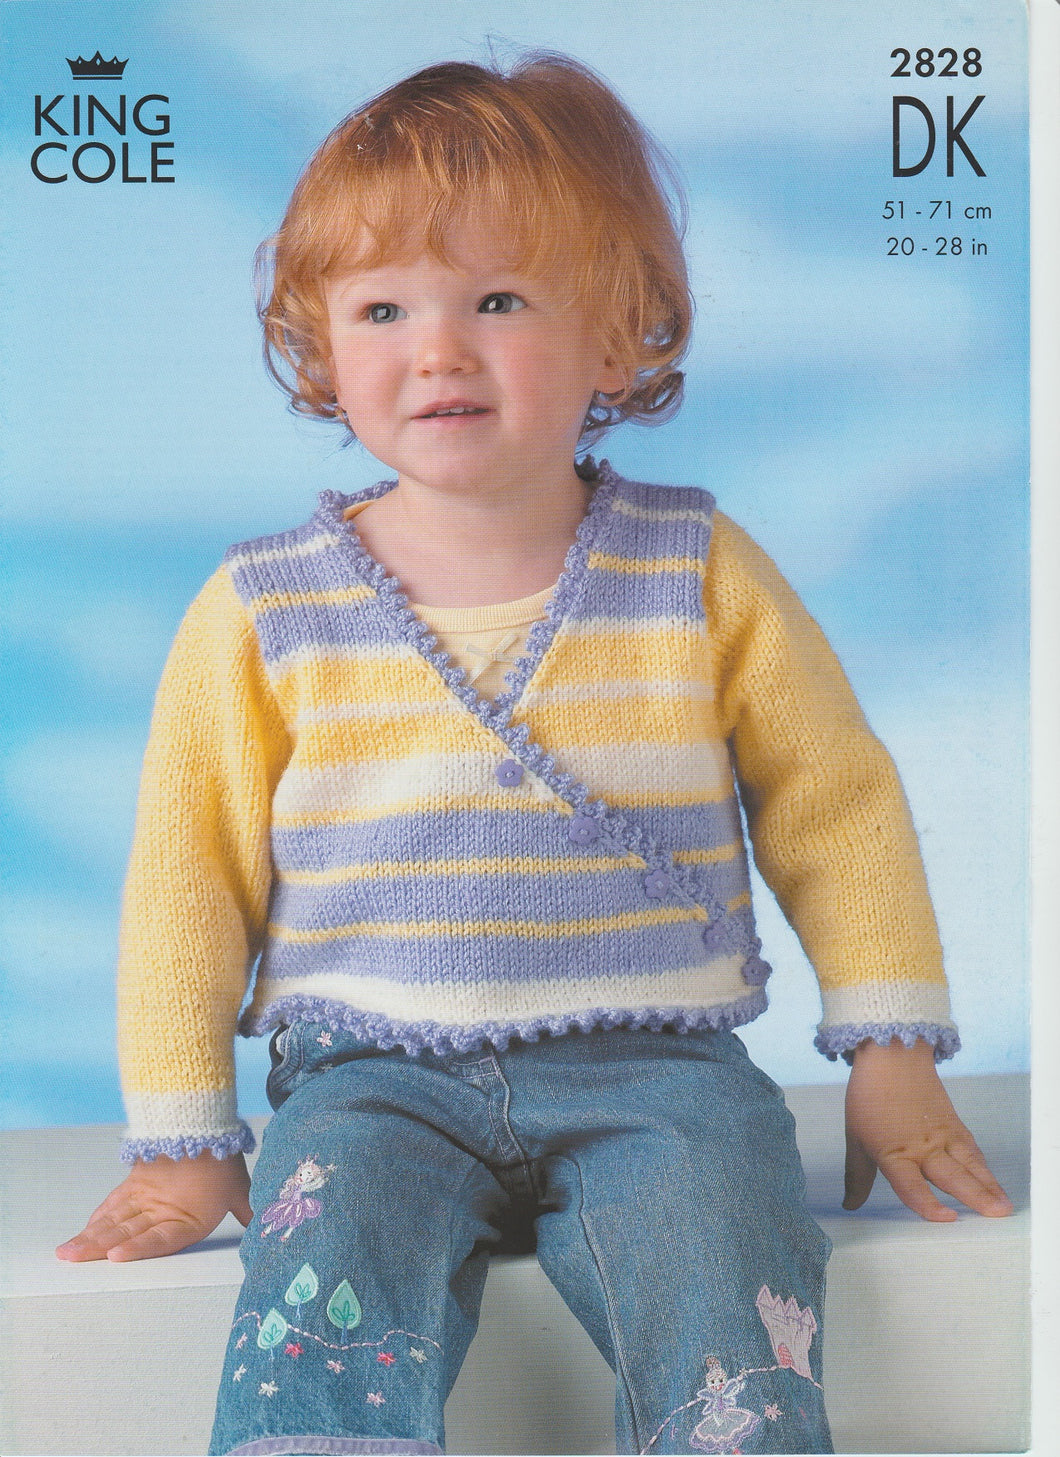 Knitting Pattern Leaflet King Cole 2828 DK Kids Sweater, Jacket & Cardigan